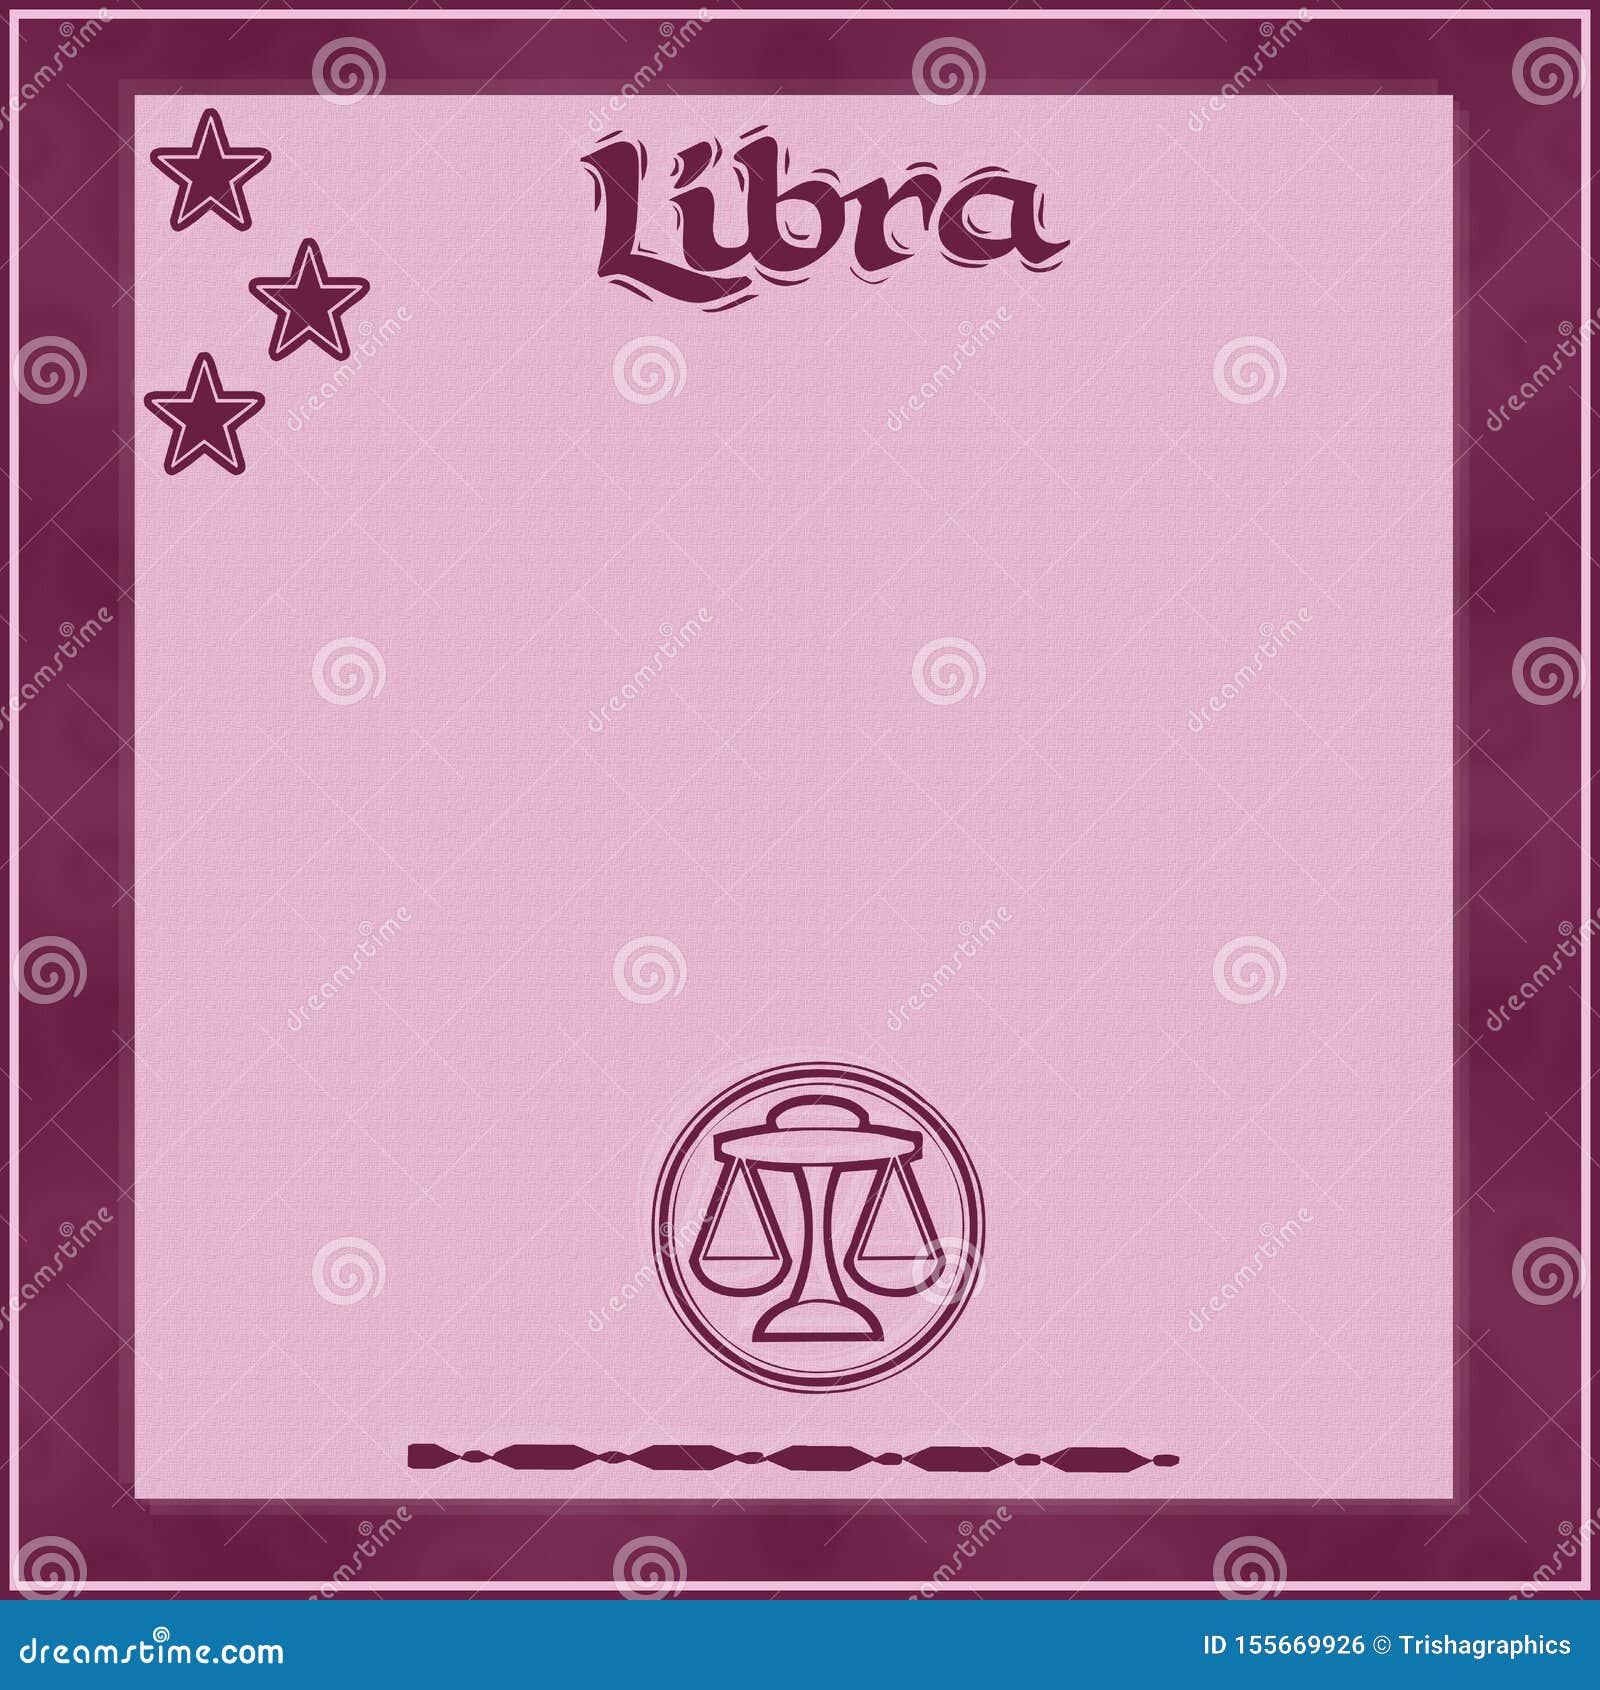 elegant frame with zodiac sign-libra